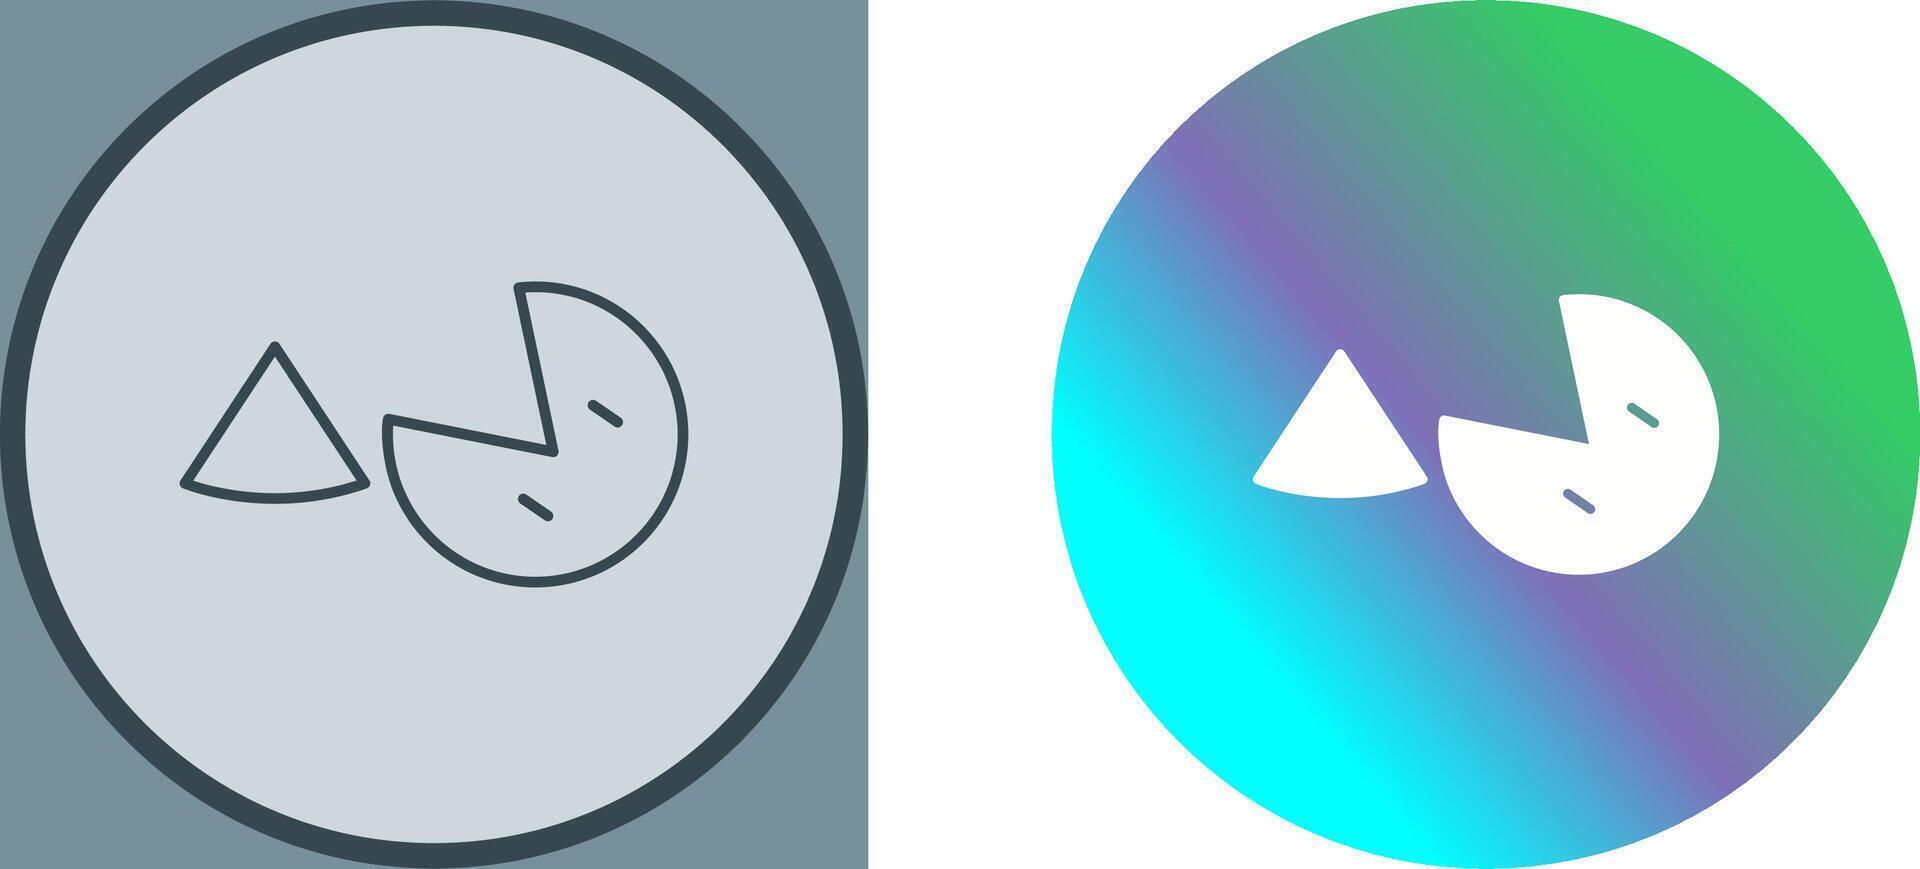 Pie Icon Design vector